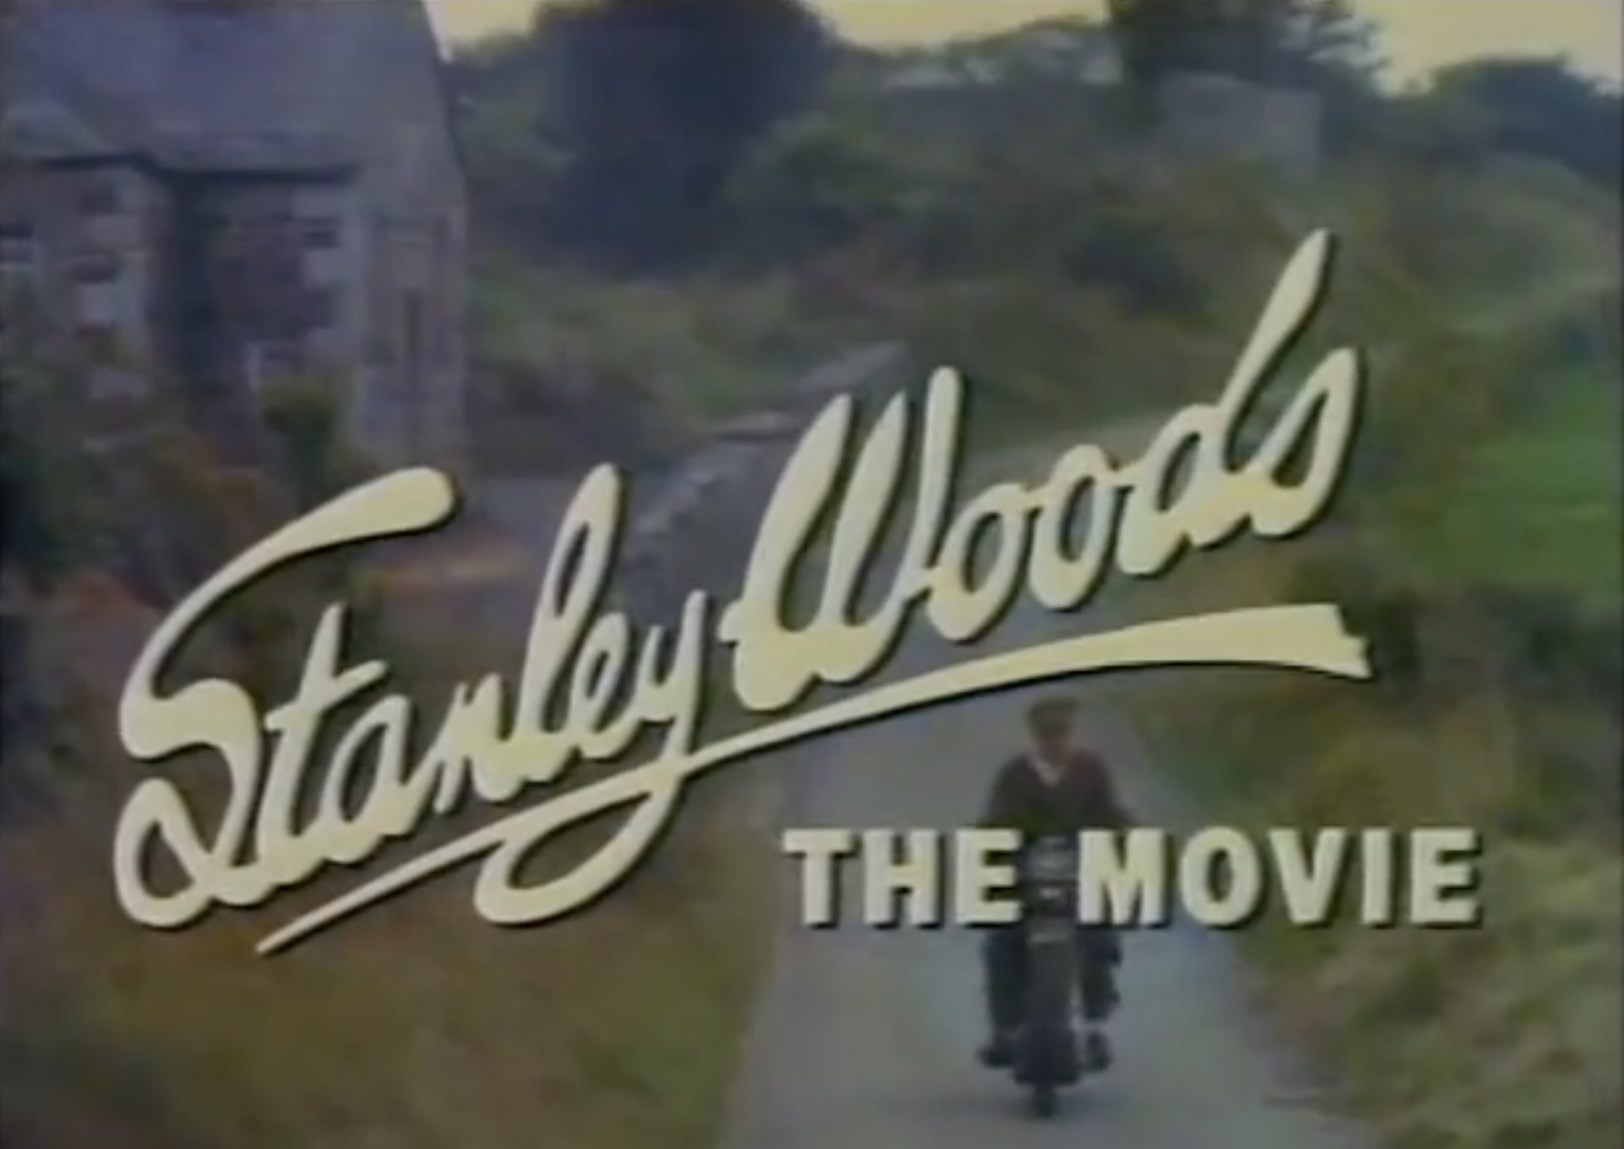 Stanley Woods Film